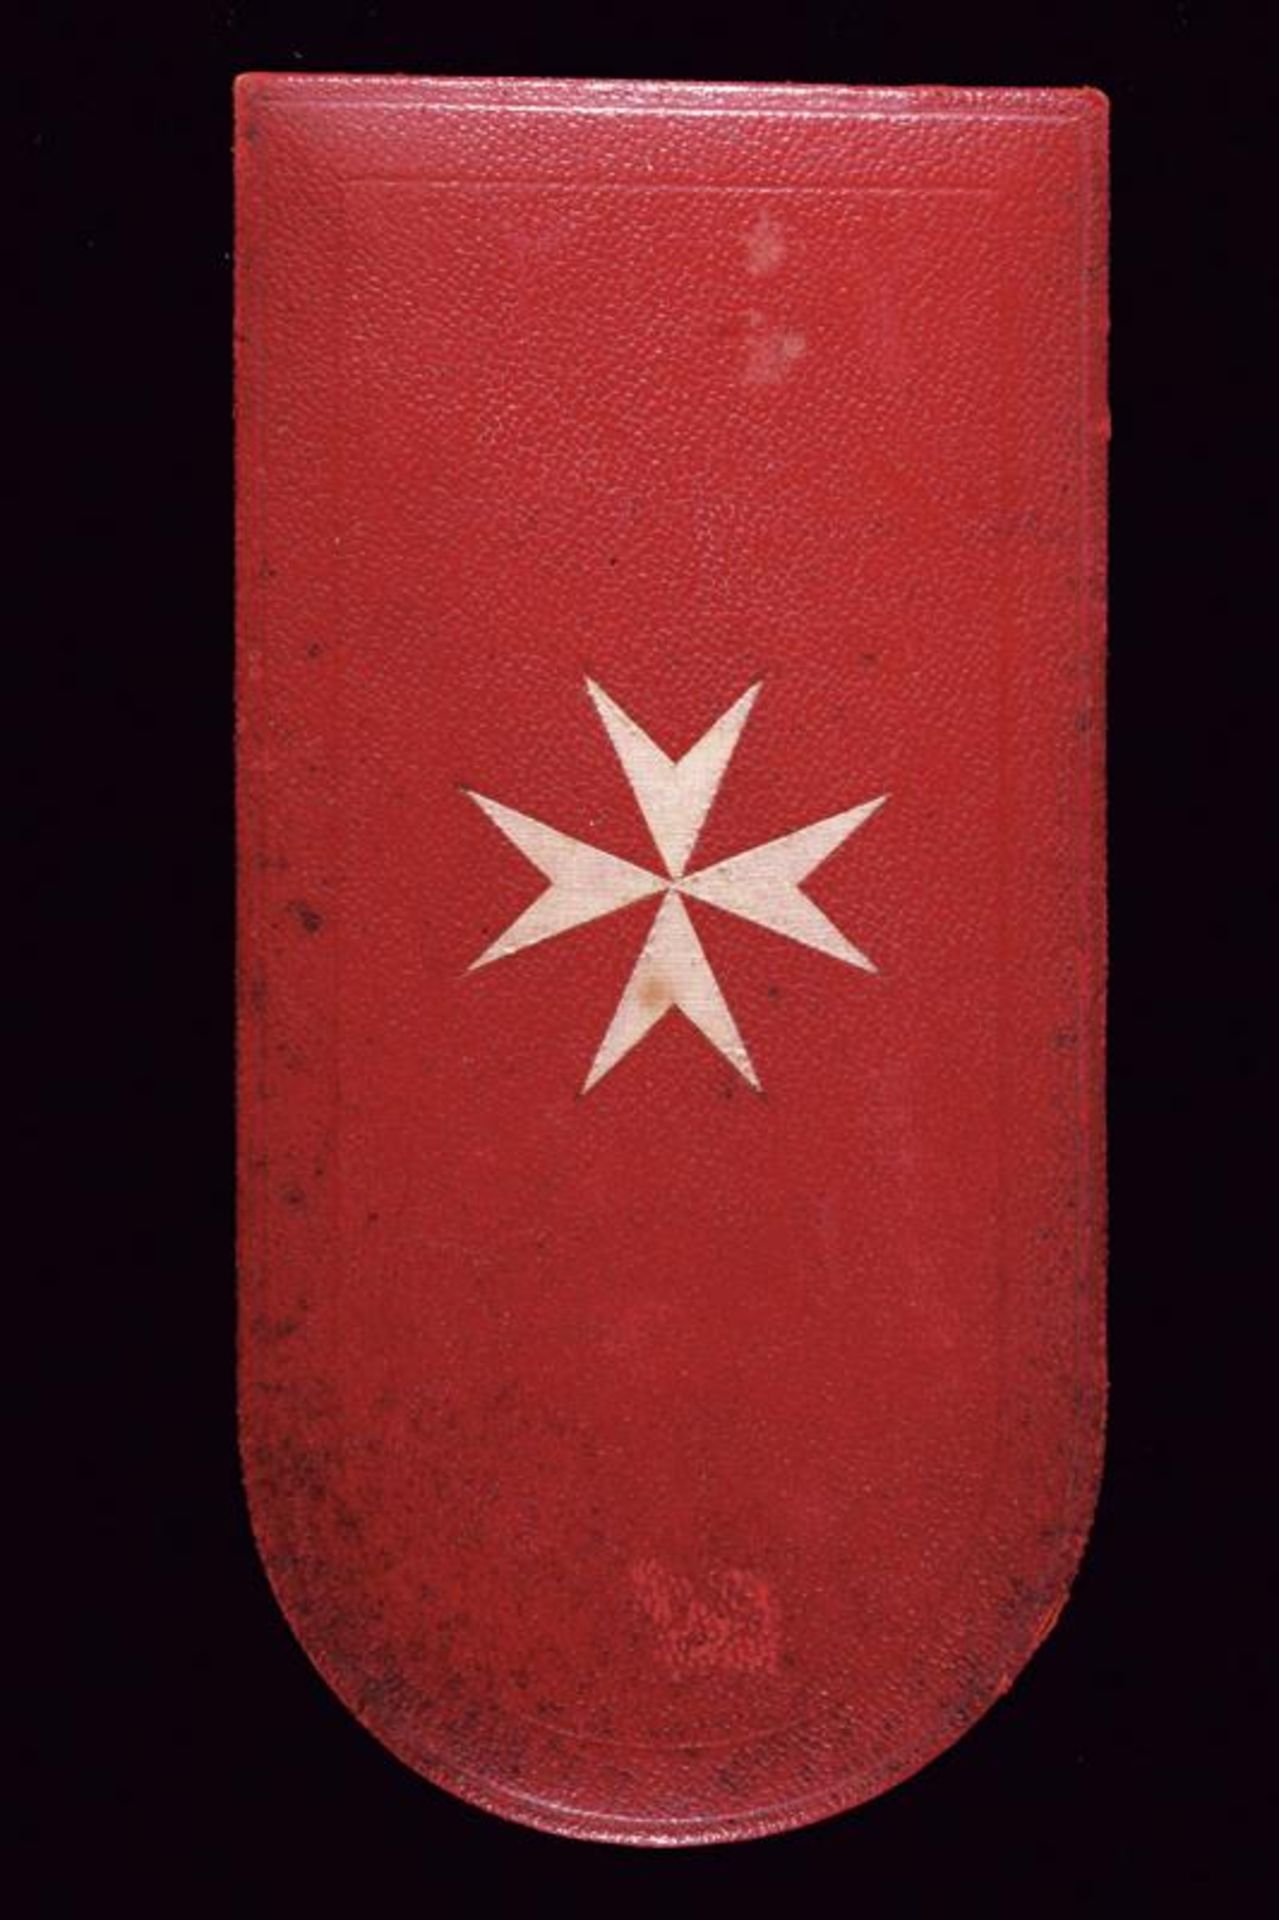 Sovereign Militar Order of Malta - Image 4 of 5